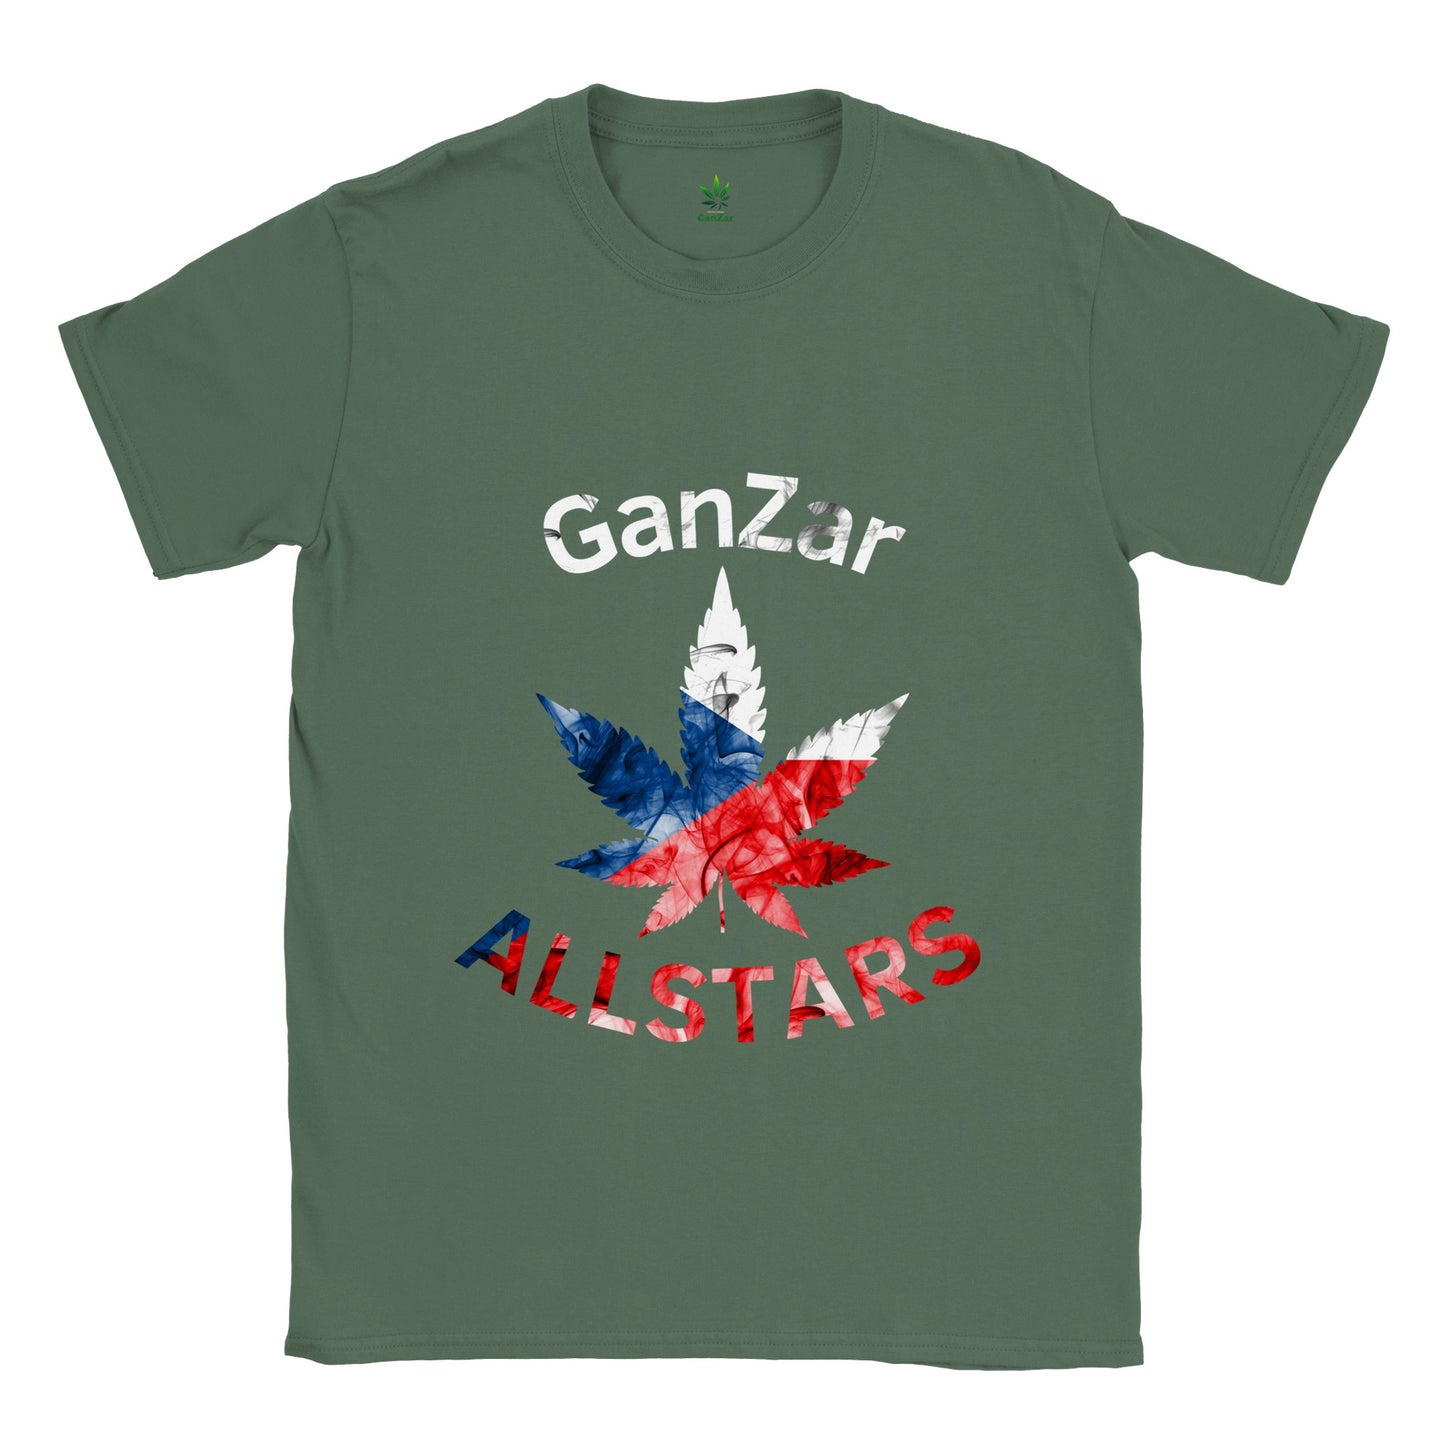 Tschechien GanZar Allstars Unisex T-Shirt